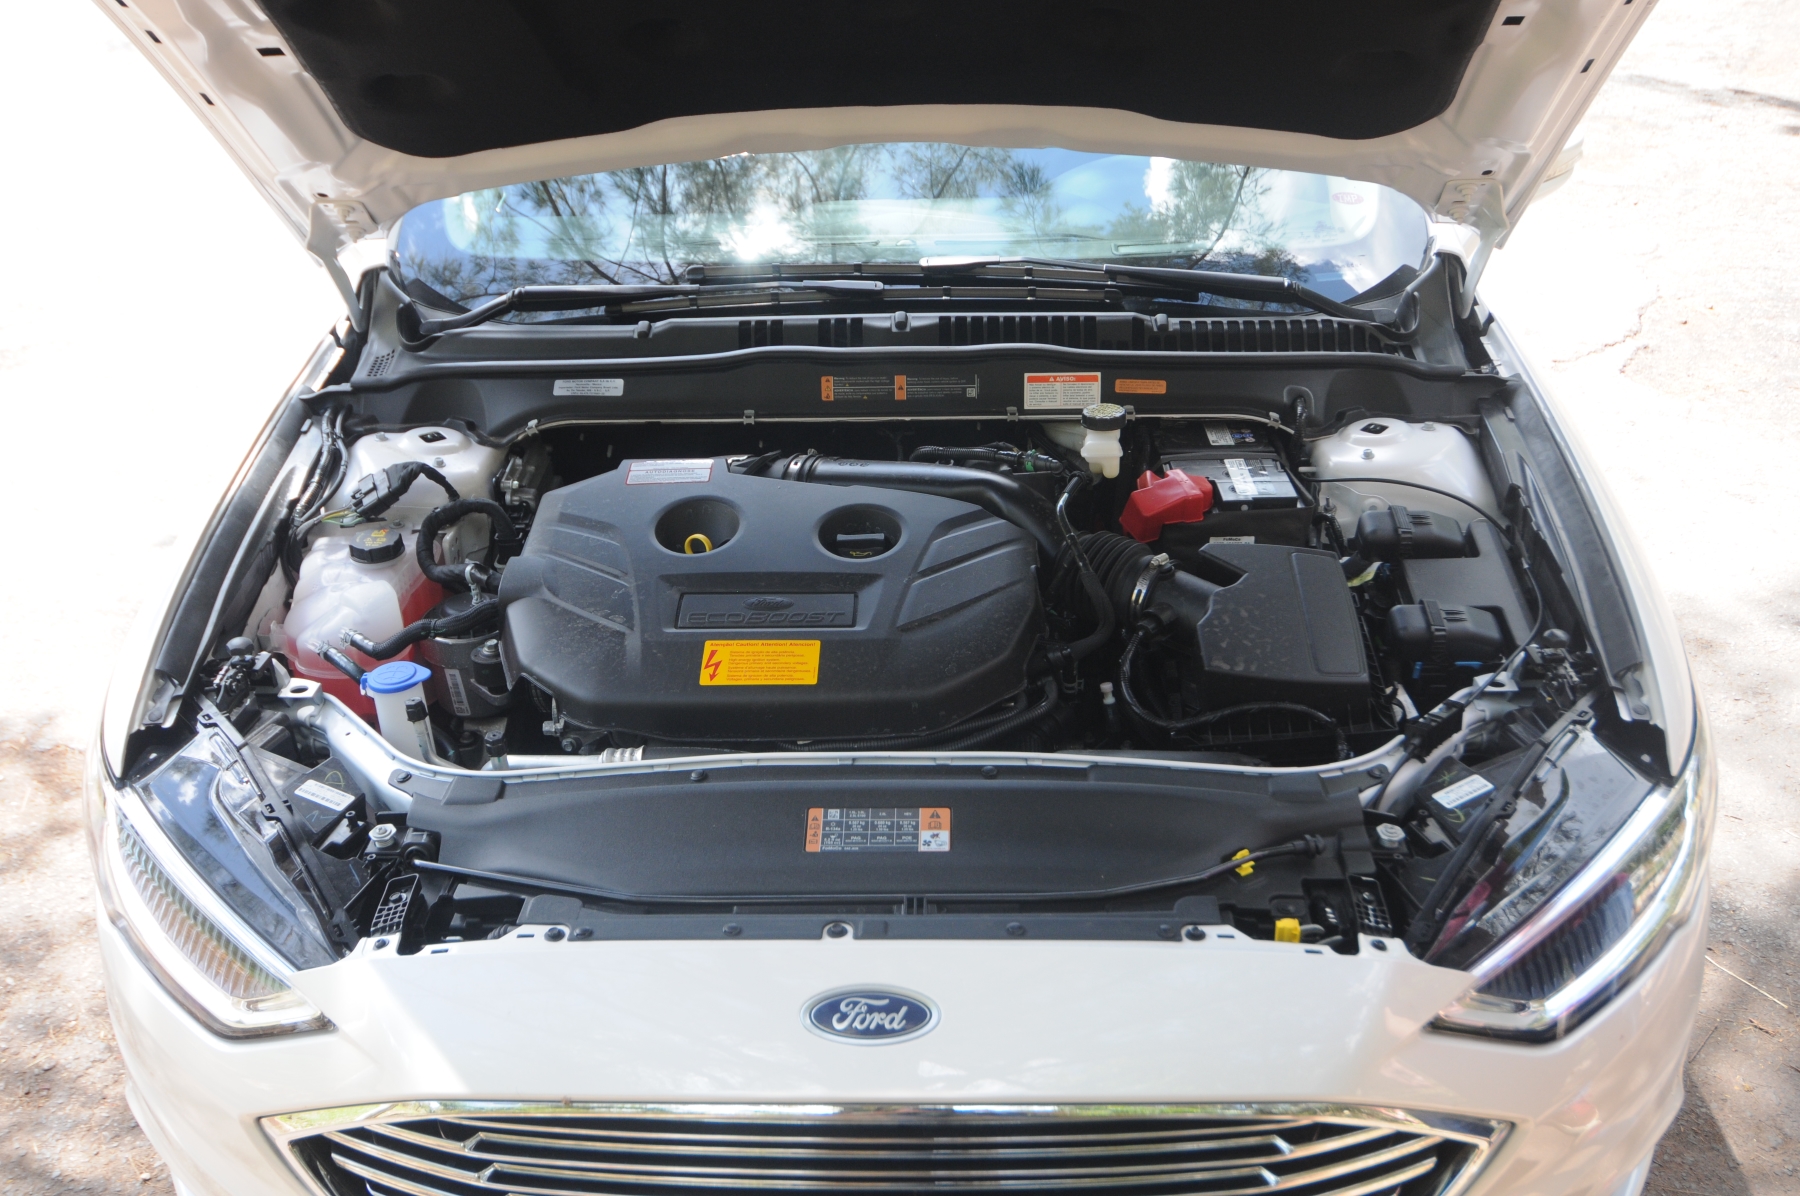 Ford Fusion Titanium 2.0 EcoBoost AWD sedan modelo 2015 2016 branco cofre do motor